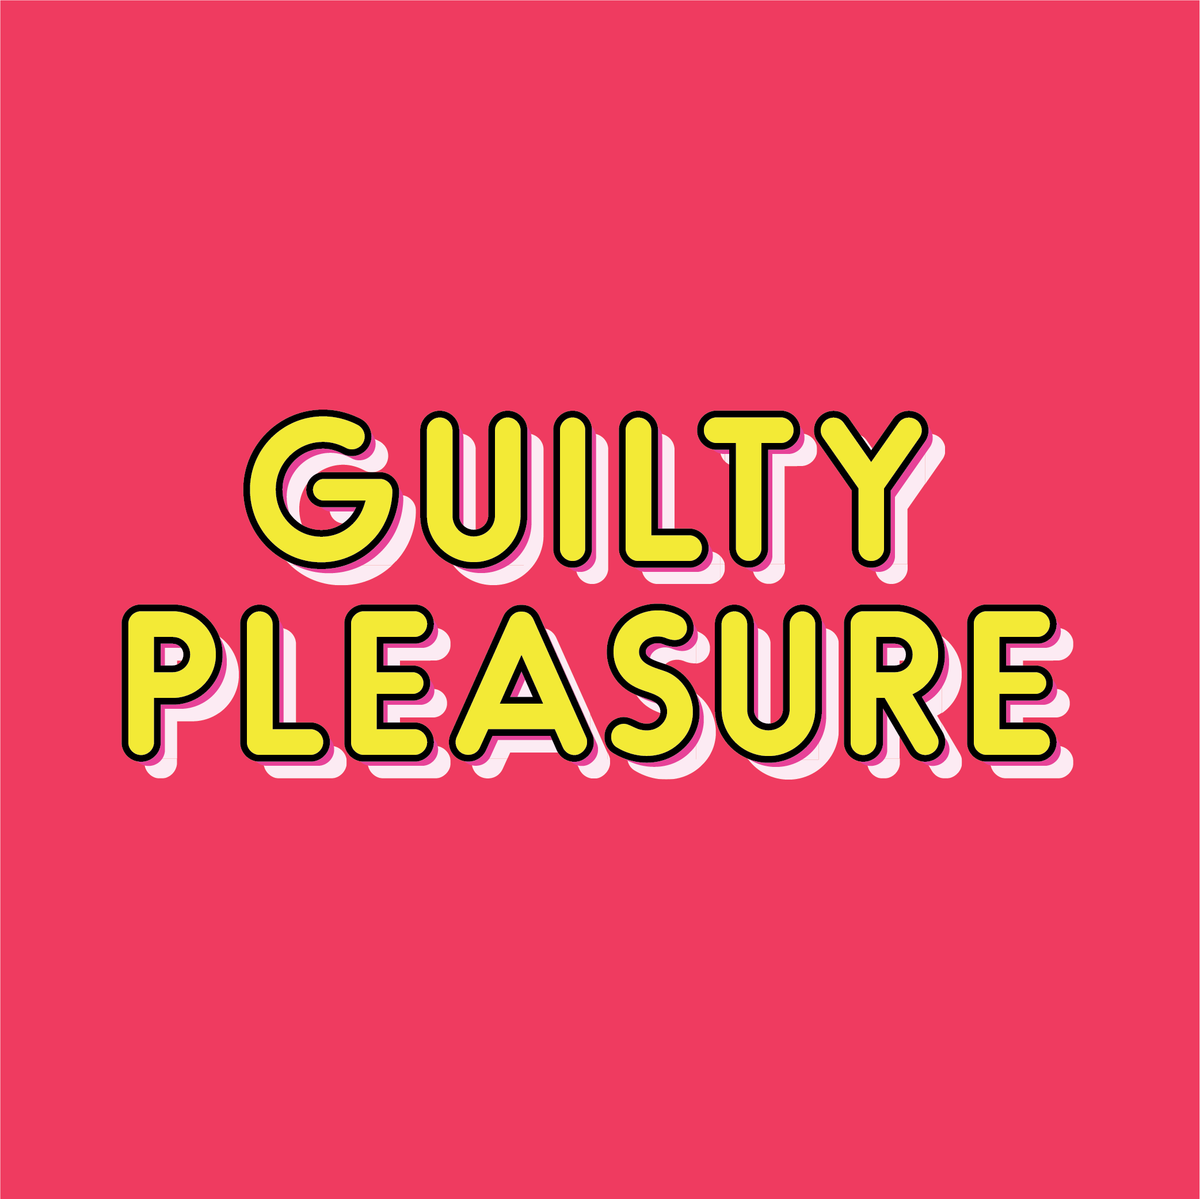 Guilty pleasure